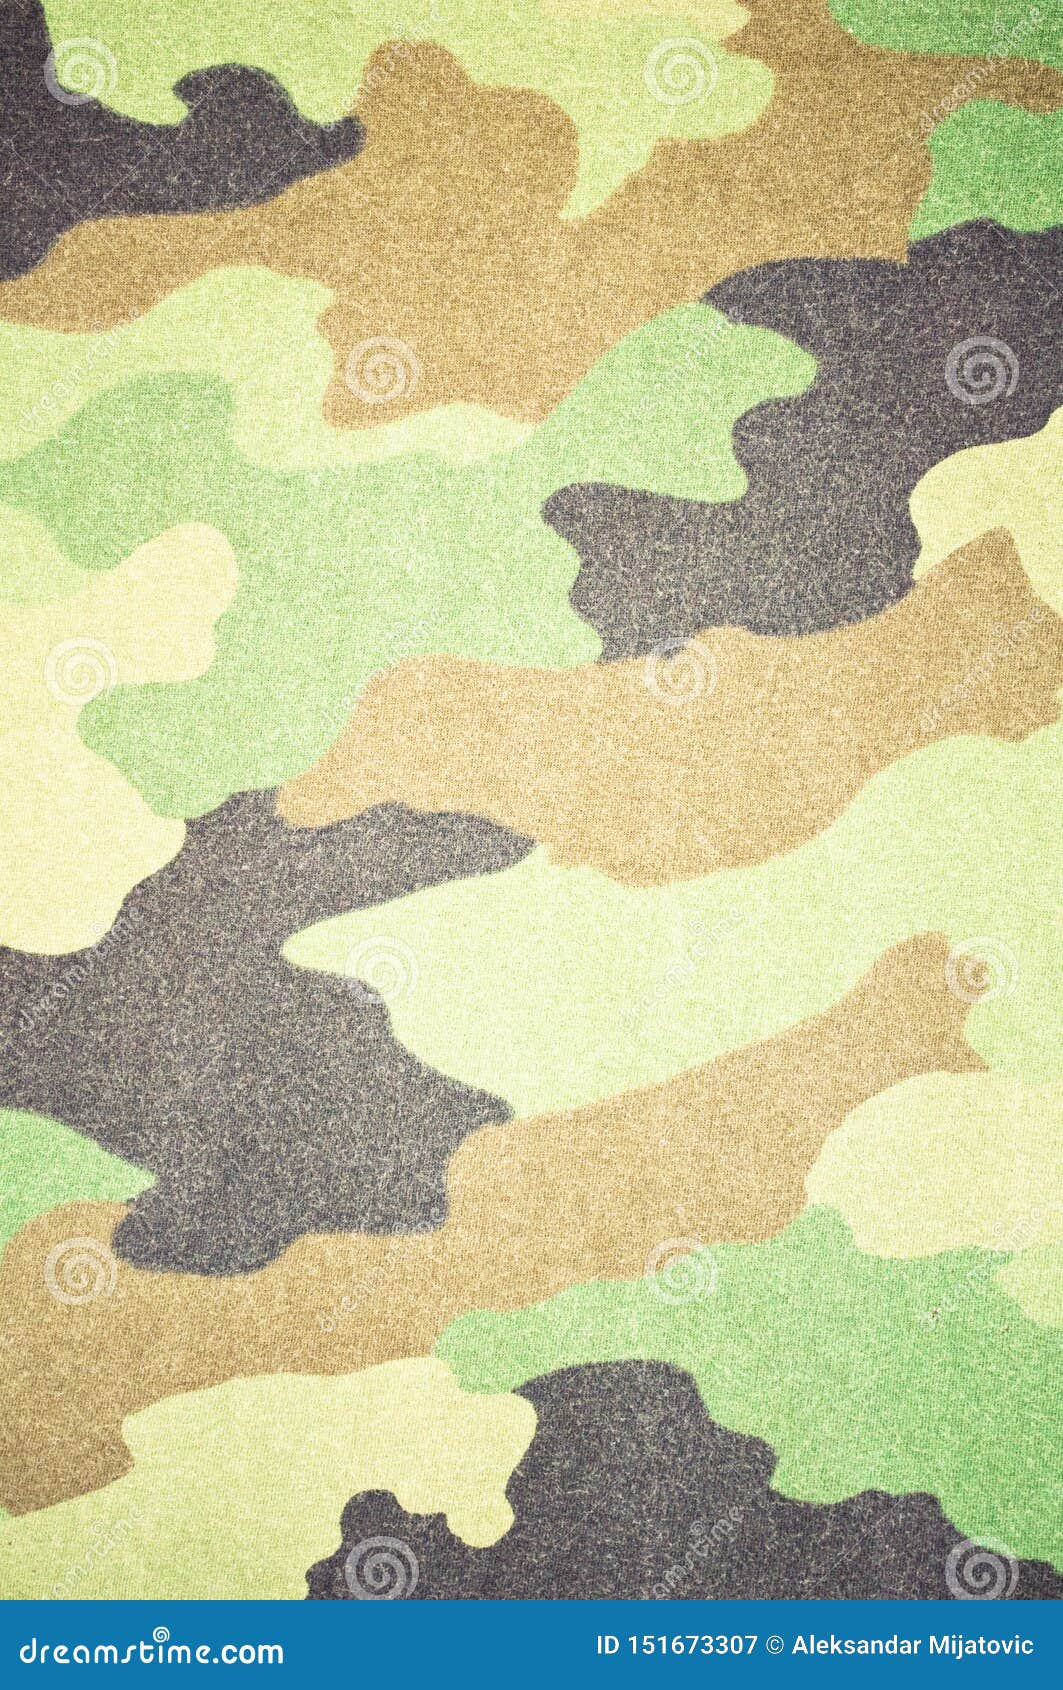  Army  Woodland military Camouflage  Fabric  Stock Image 